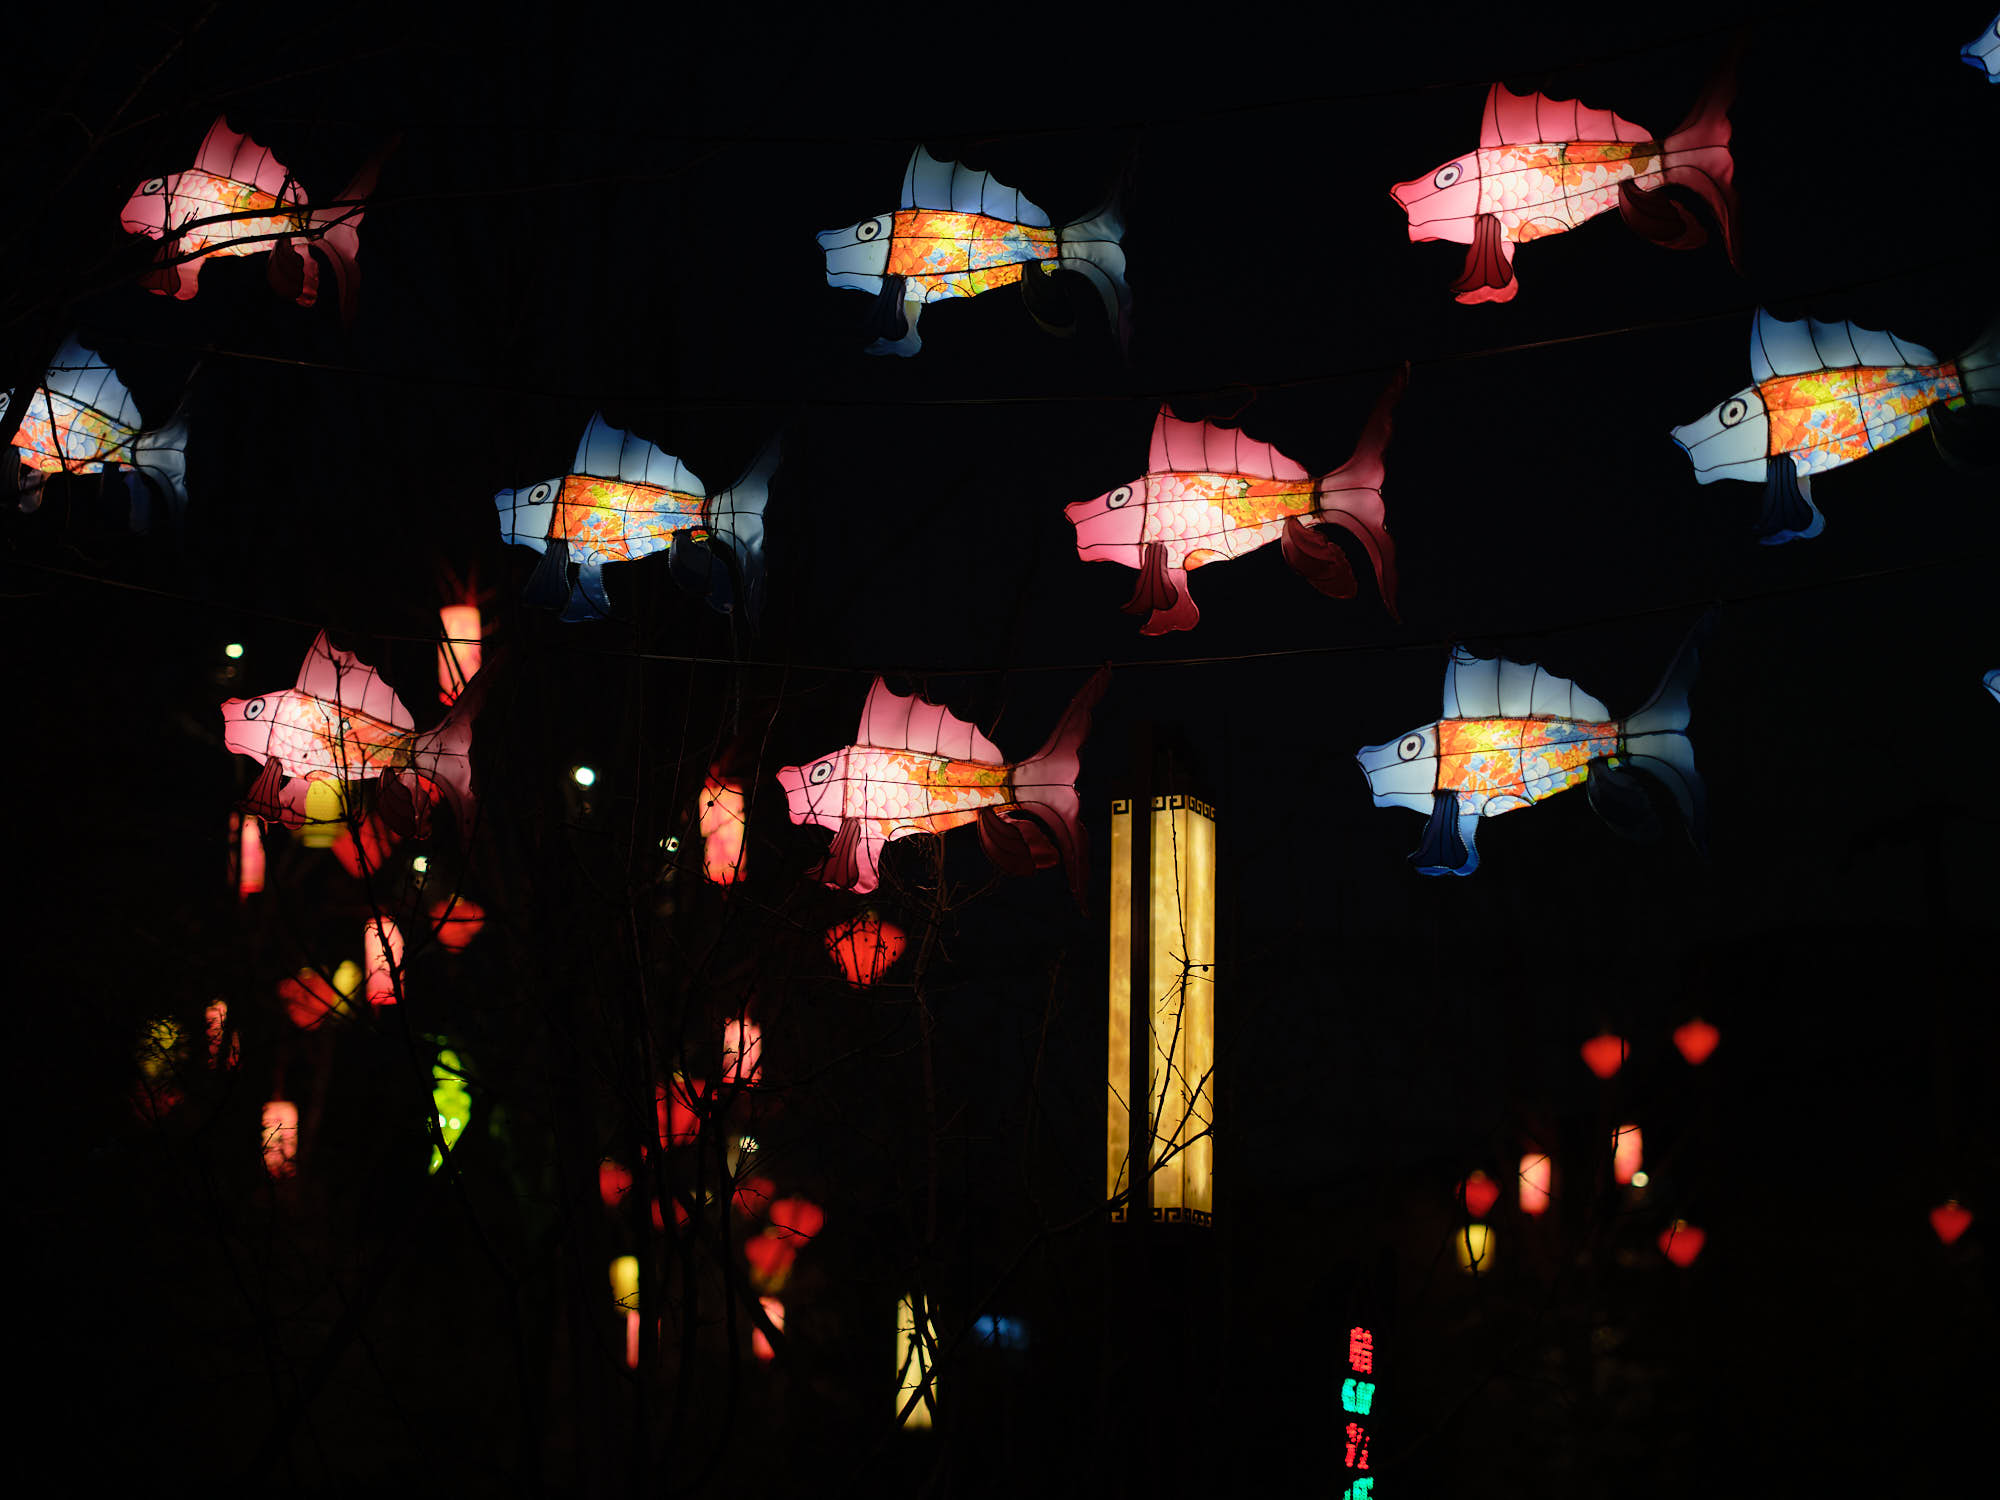 Flying fish outdoor decoration at night, Hutong Beijing